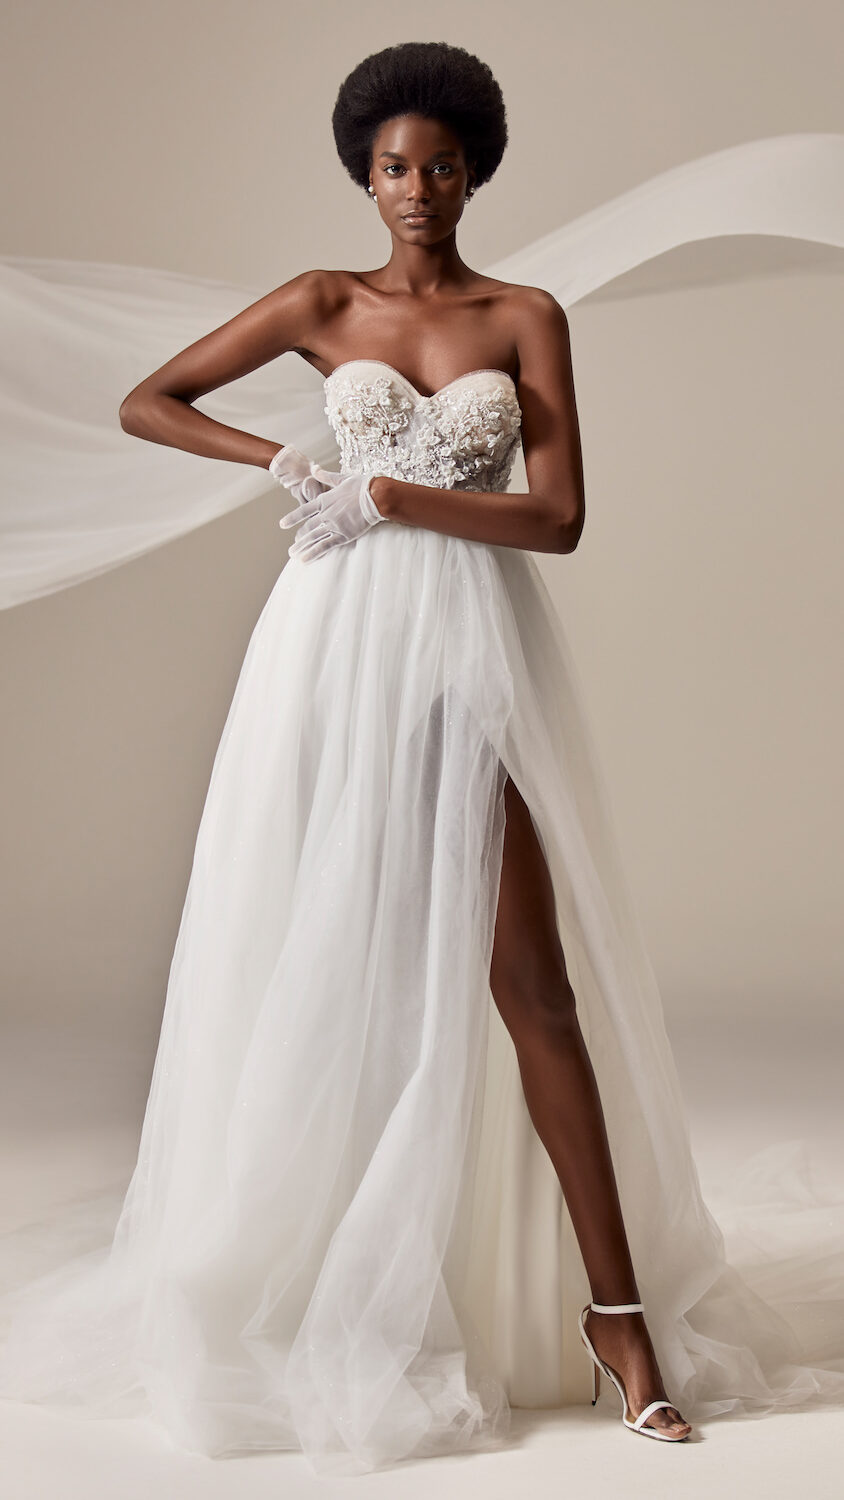 High slit Wedding Dress by Milla Nova - Charly white lace day